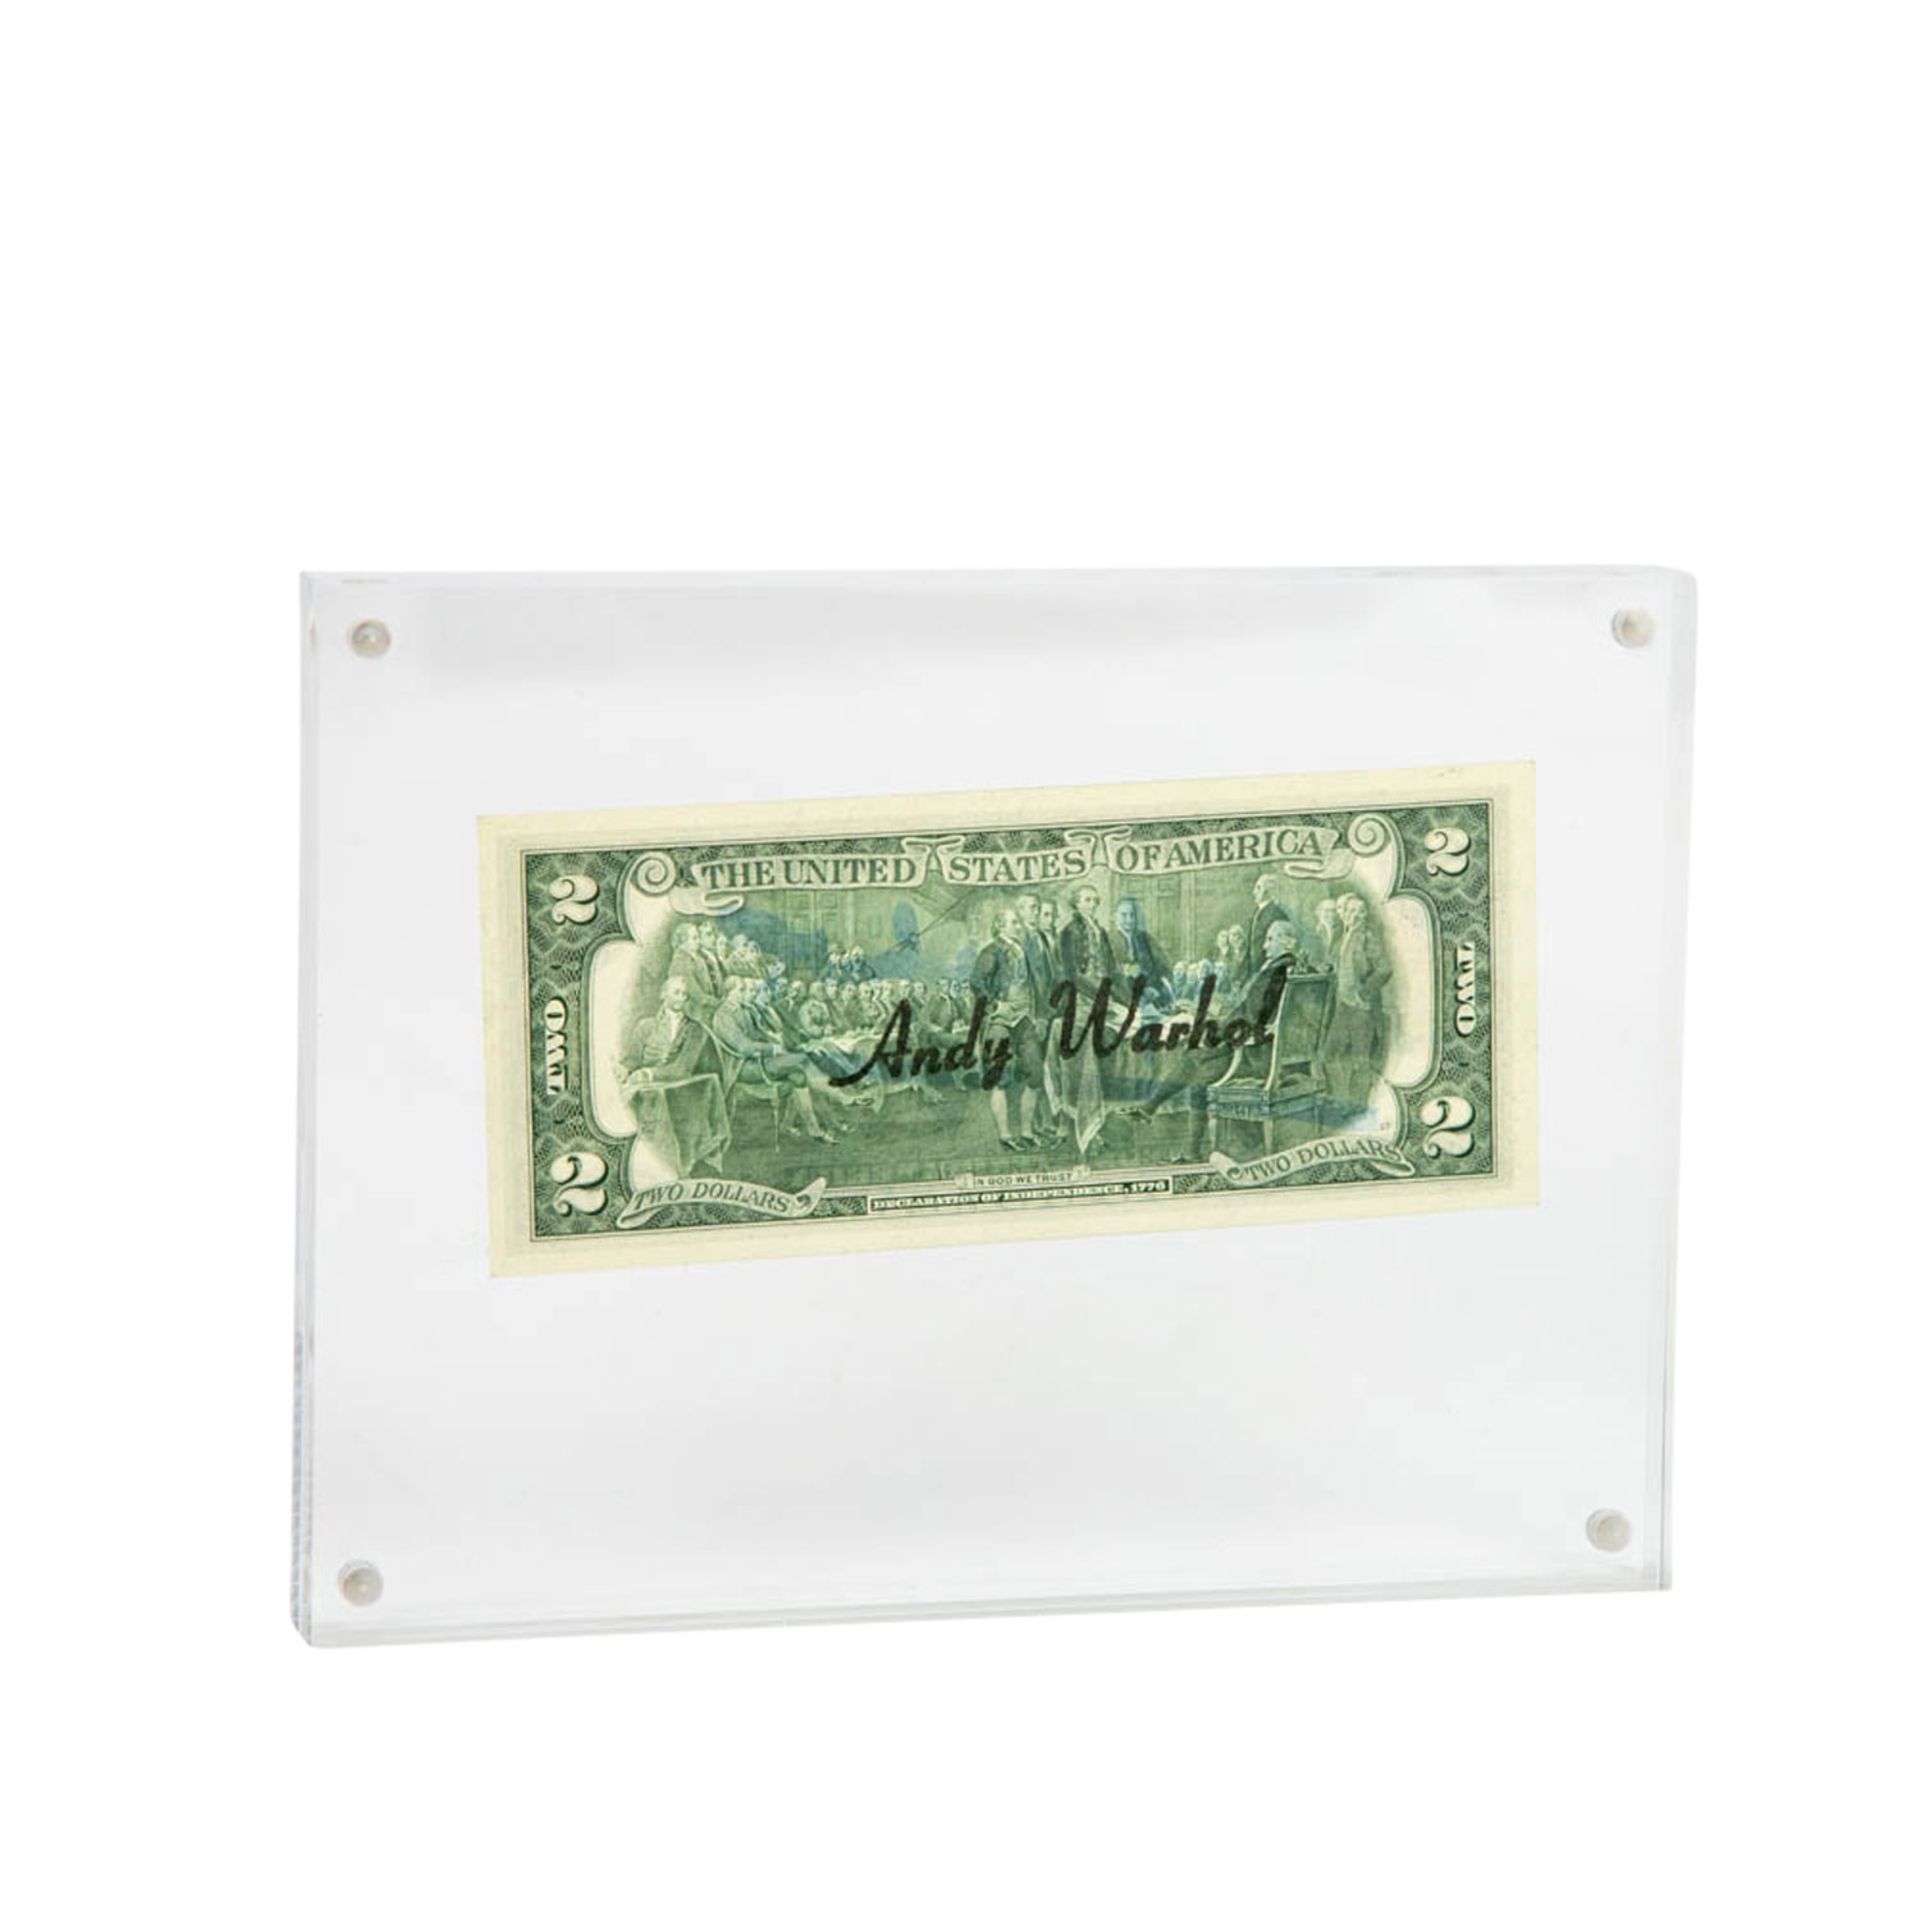 WARHOL, ANDY (1928 - 1987), "2-Jefferson Dollars", 1976, - Image 2 of 2